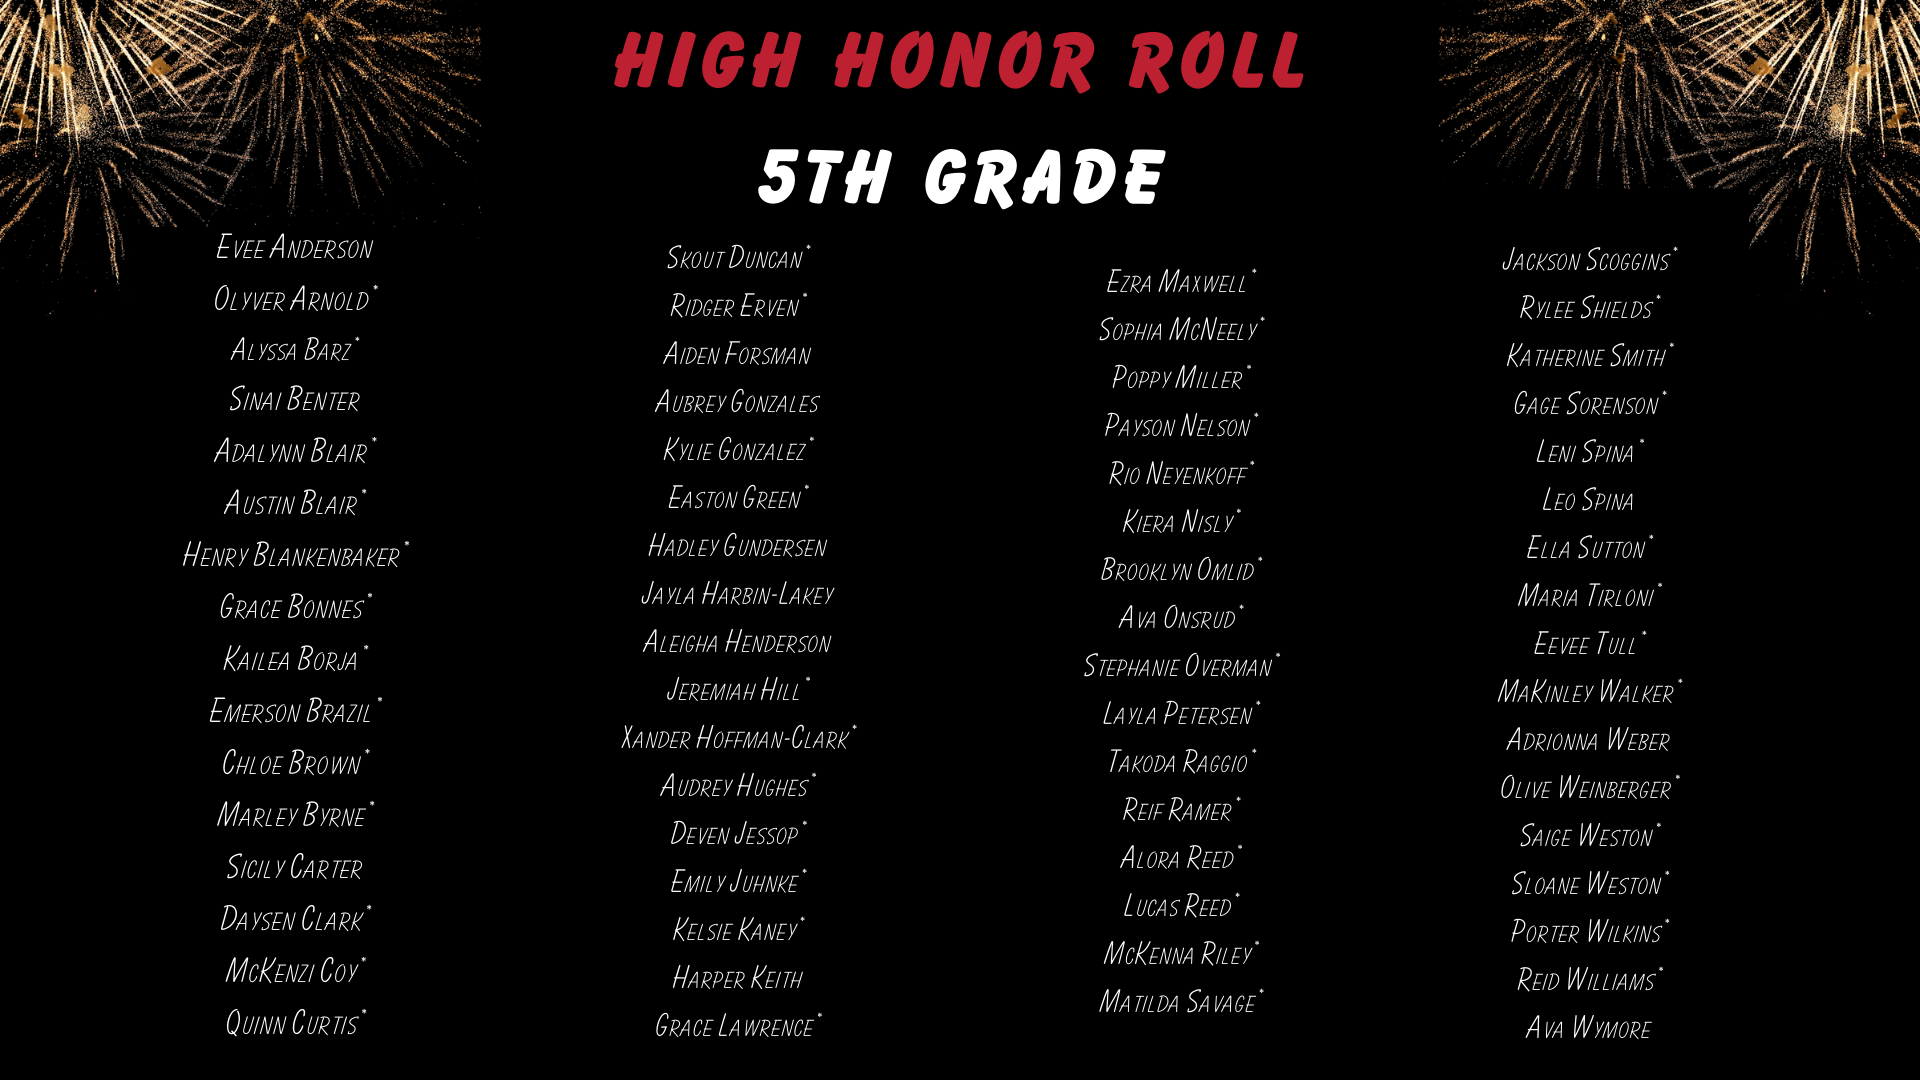 High Honor Roll 5th grade